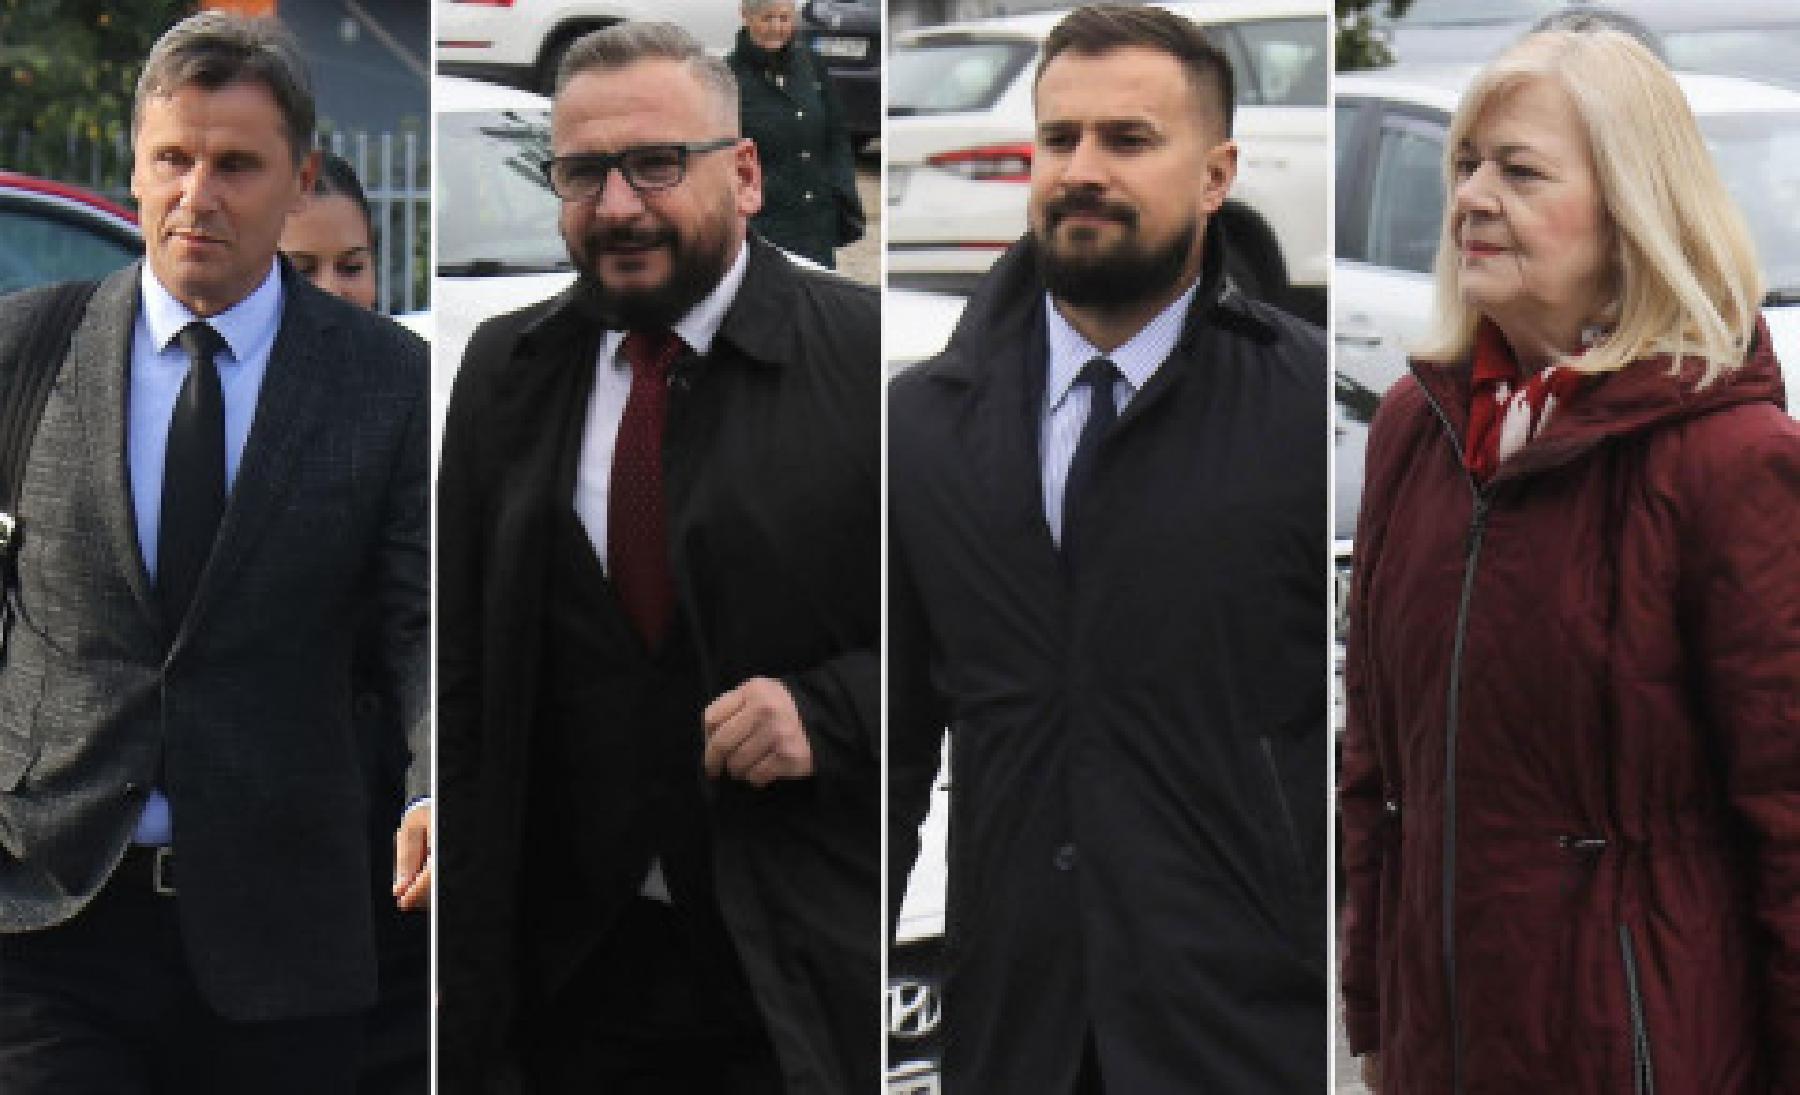 Novalić prvostepeno osuđen na četiri godine zatvora, Hodžić na pet, a Solak na šest godina